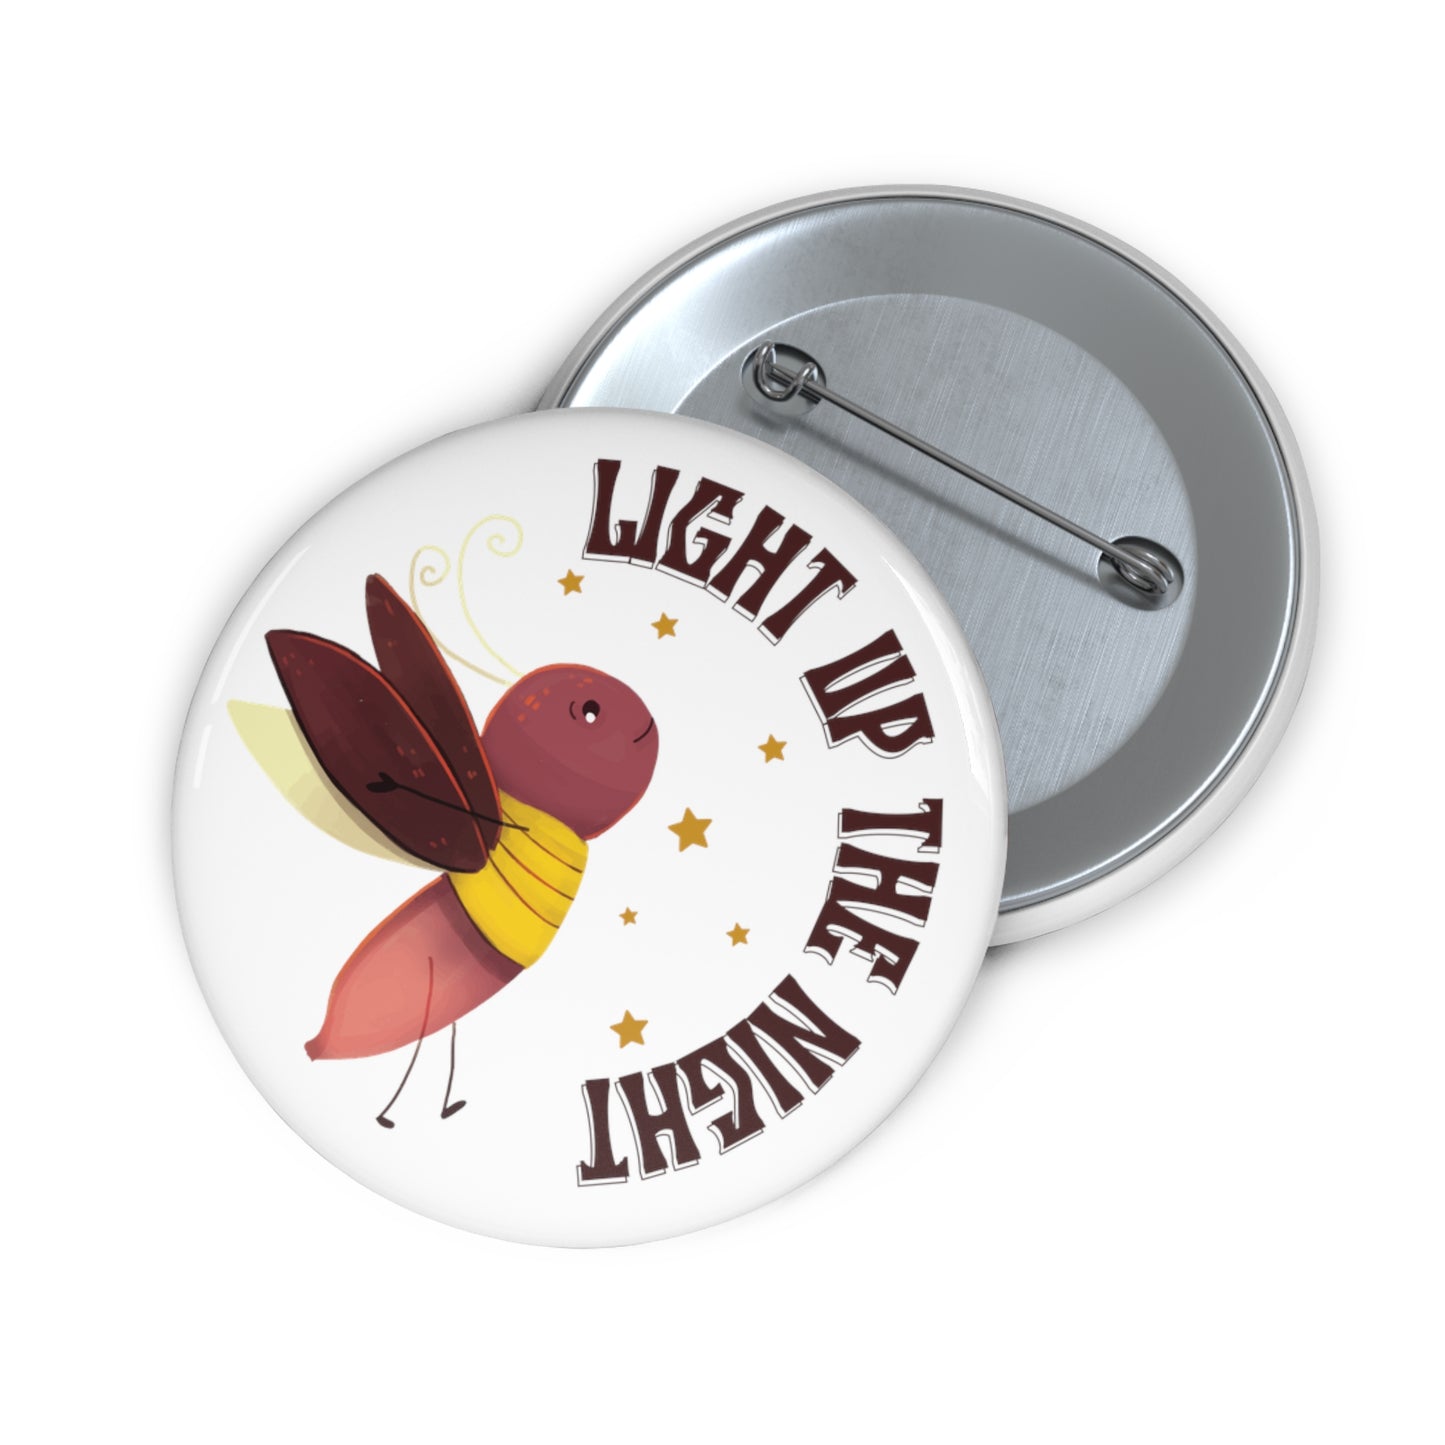 Custom Pin Buttons - Light Up the Night